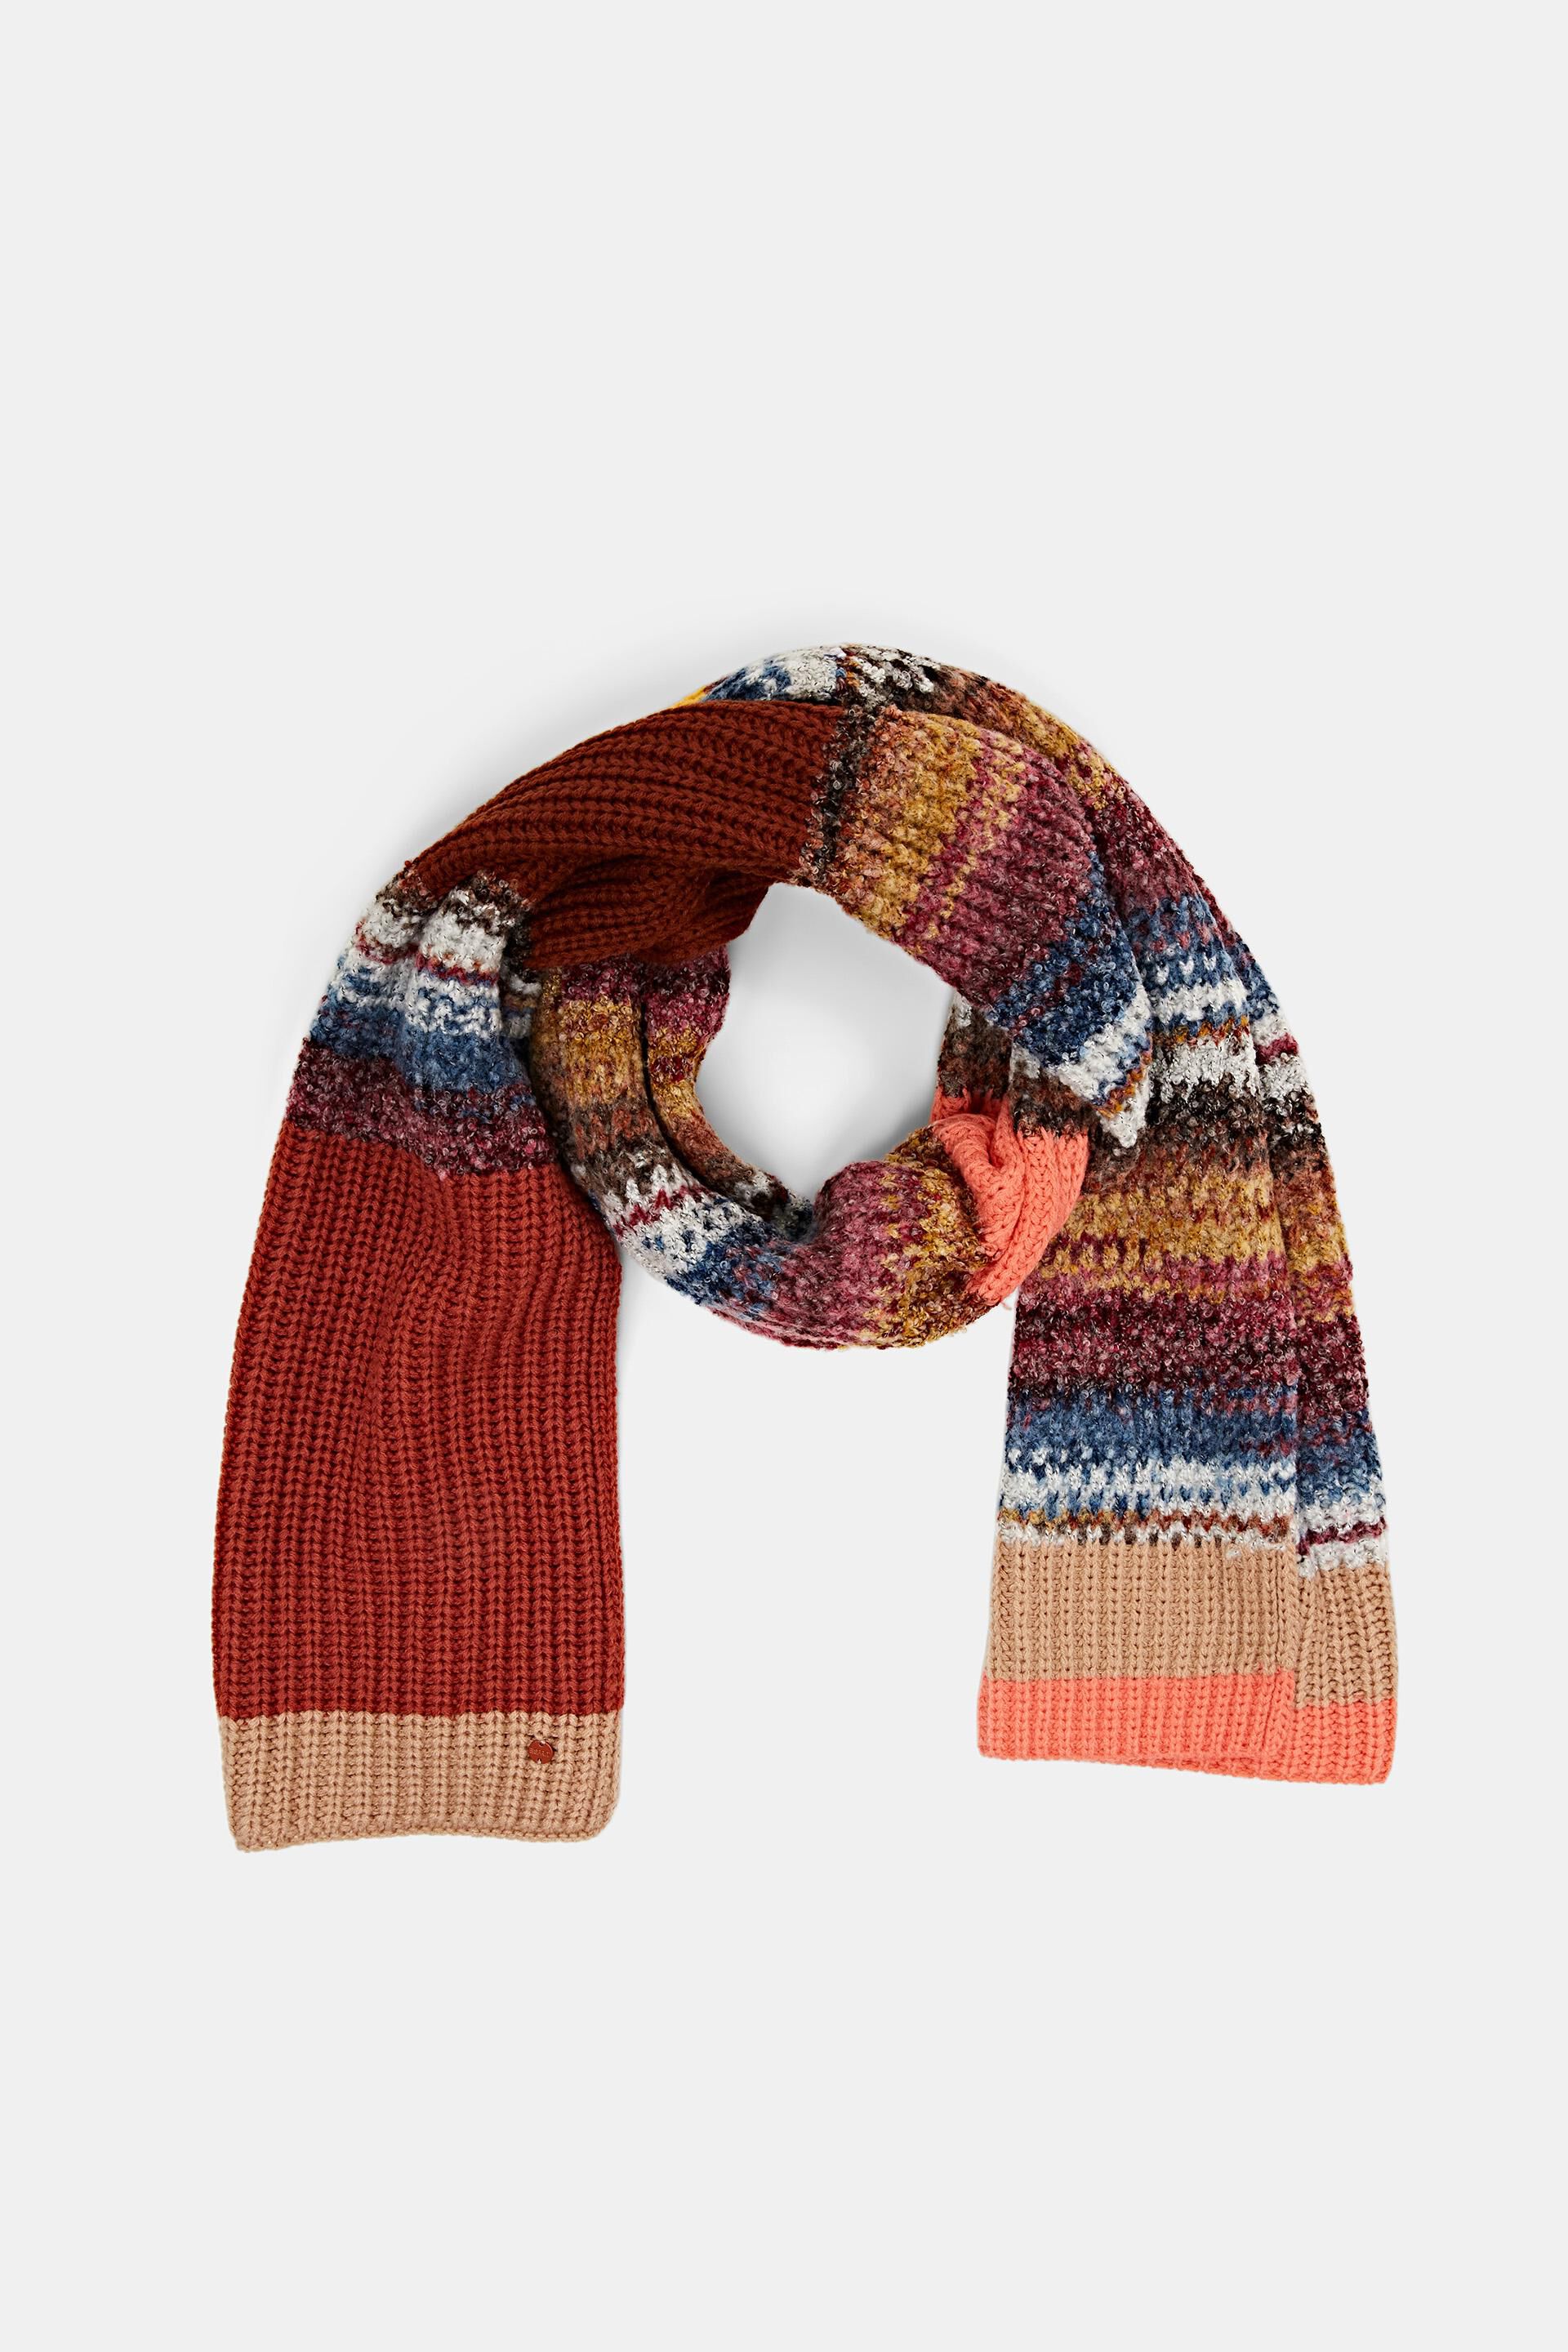 Esprit scarf, Multi-coloured blend wool knit